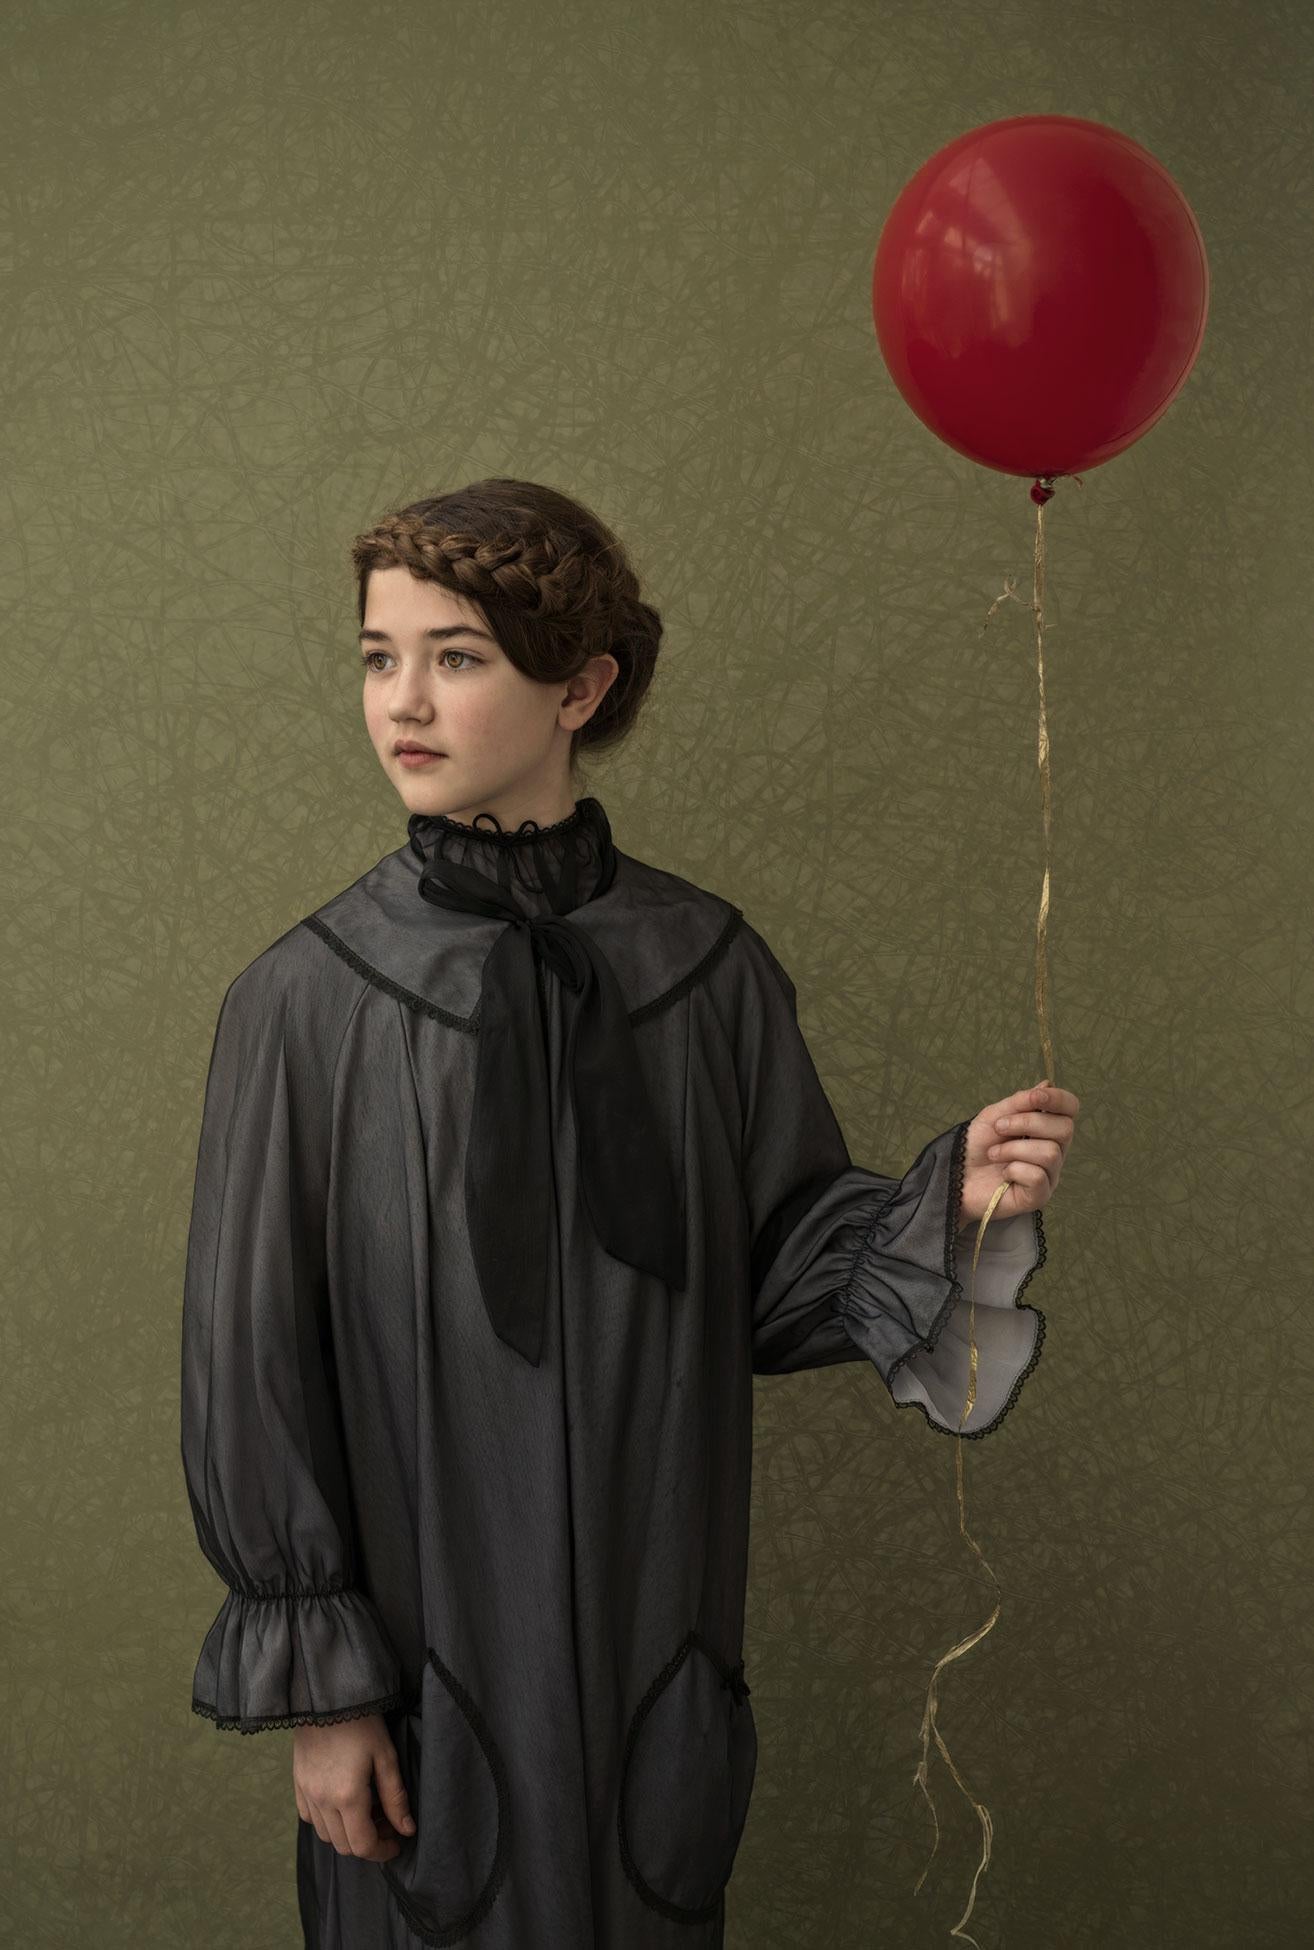 Ursula van de Bunte Portrait Photograph - ''Childhood'' Dutch Contemporary Portrait of a Girl with Red Balloon